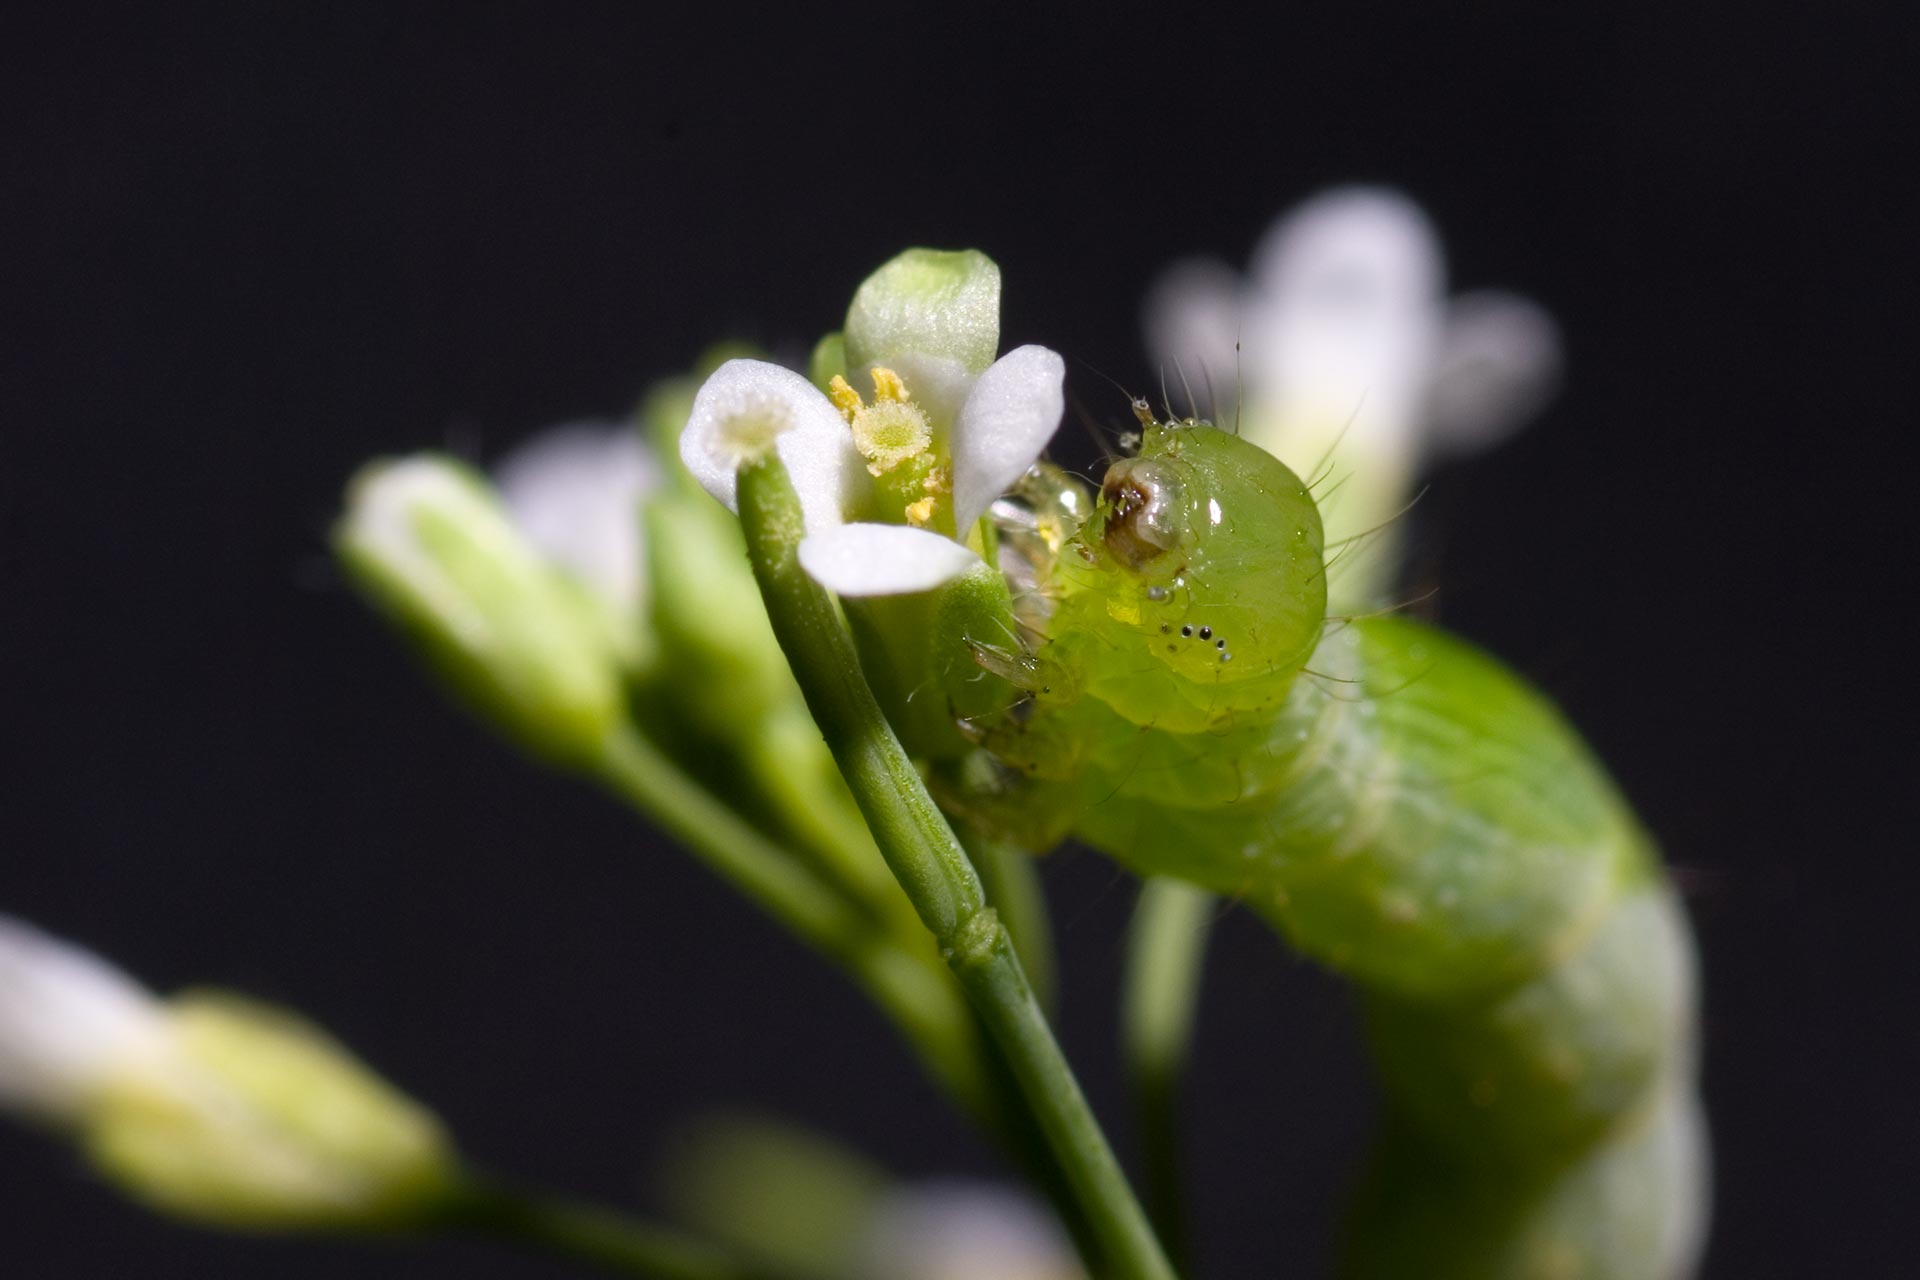 Caterpillar on a white flower